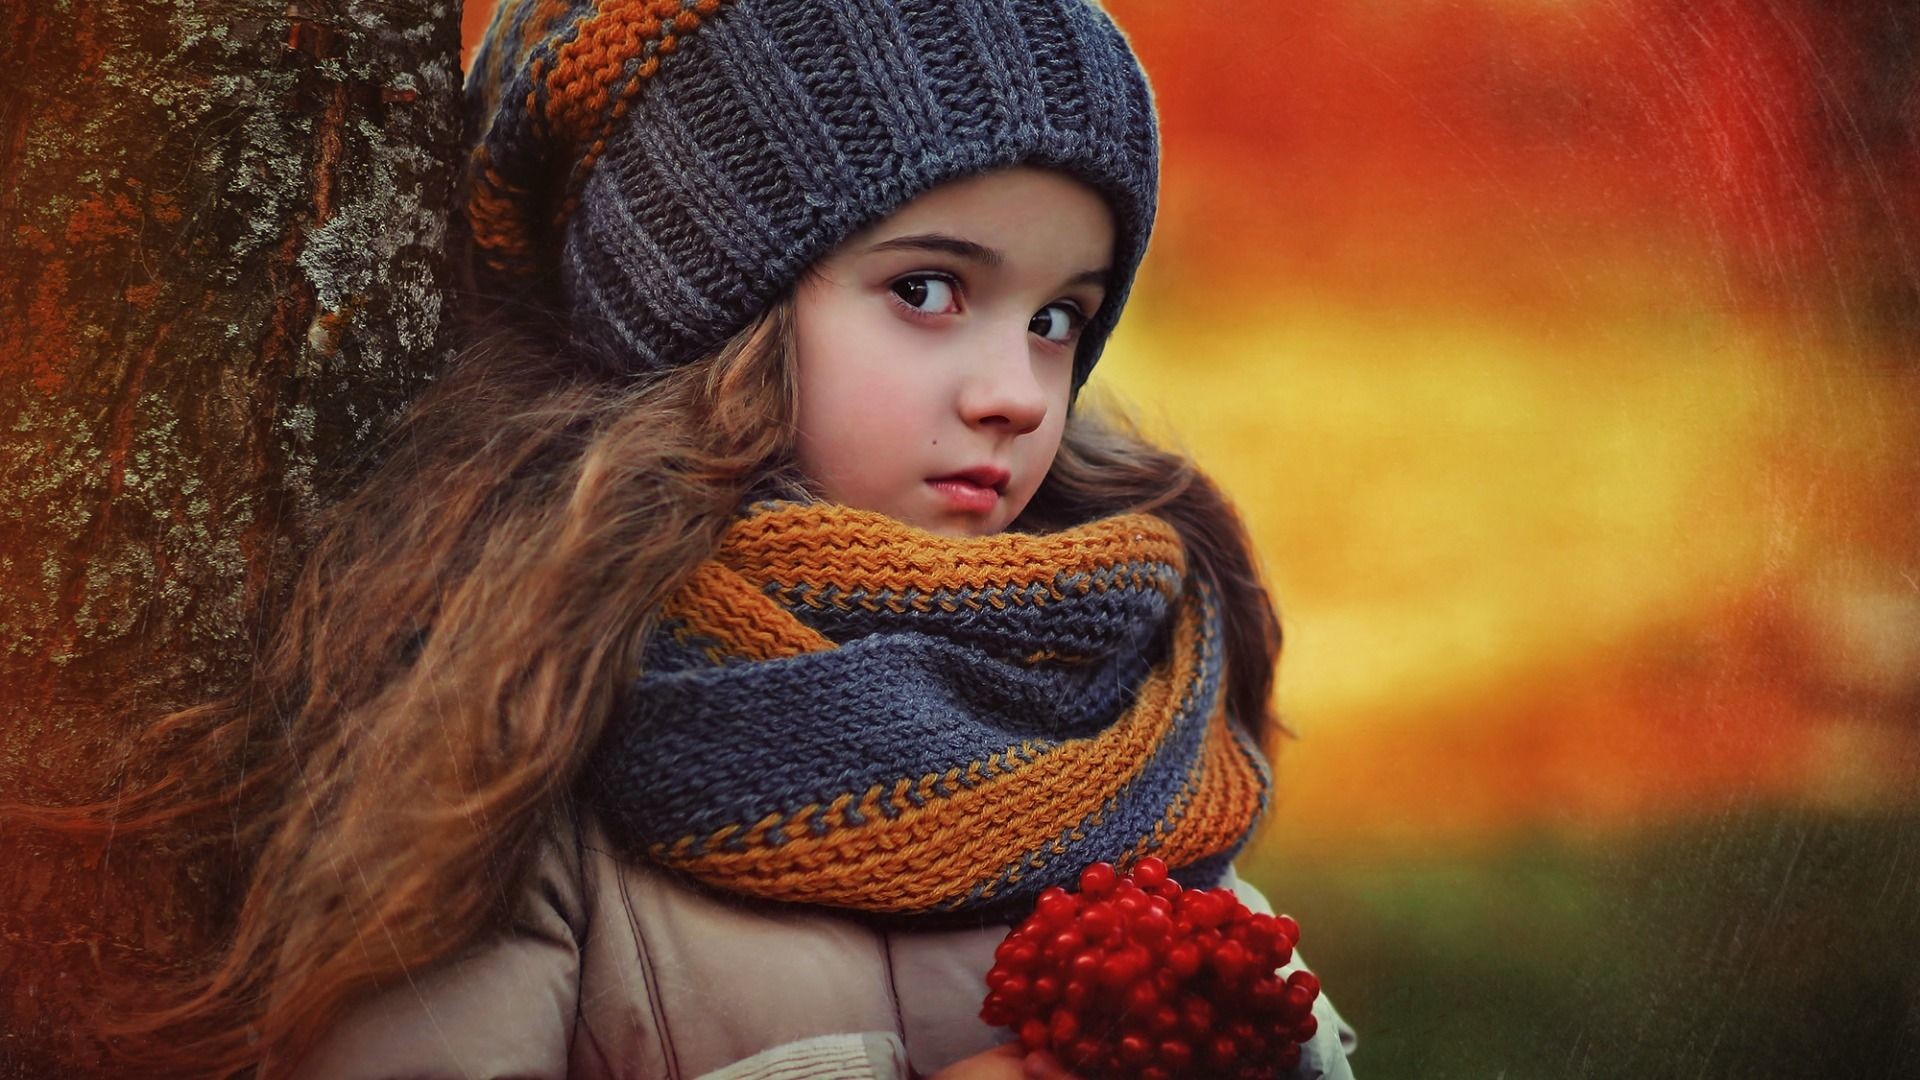 1920x1080 Download wallpaper child, girl, kids, nature, autumn, wood, berries, mood  resolution 